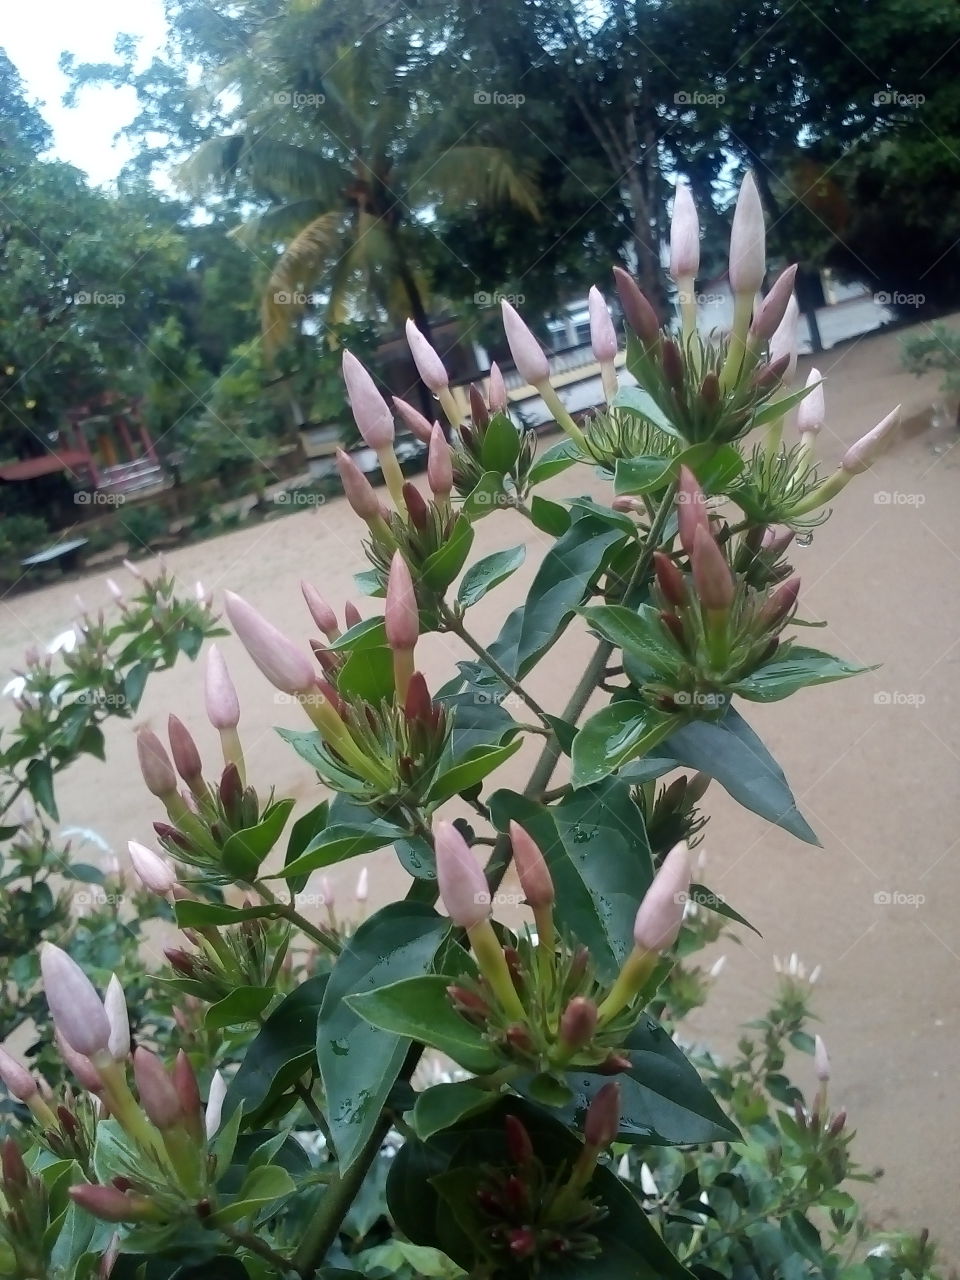 flower buds